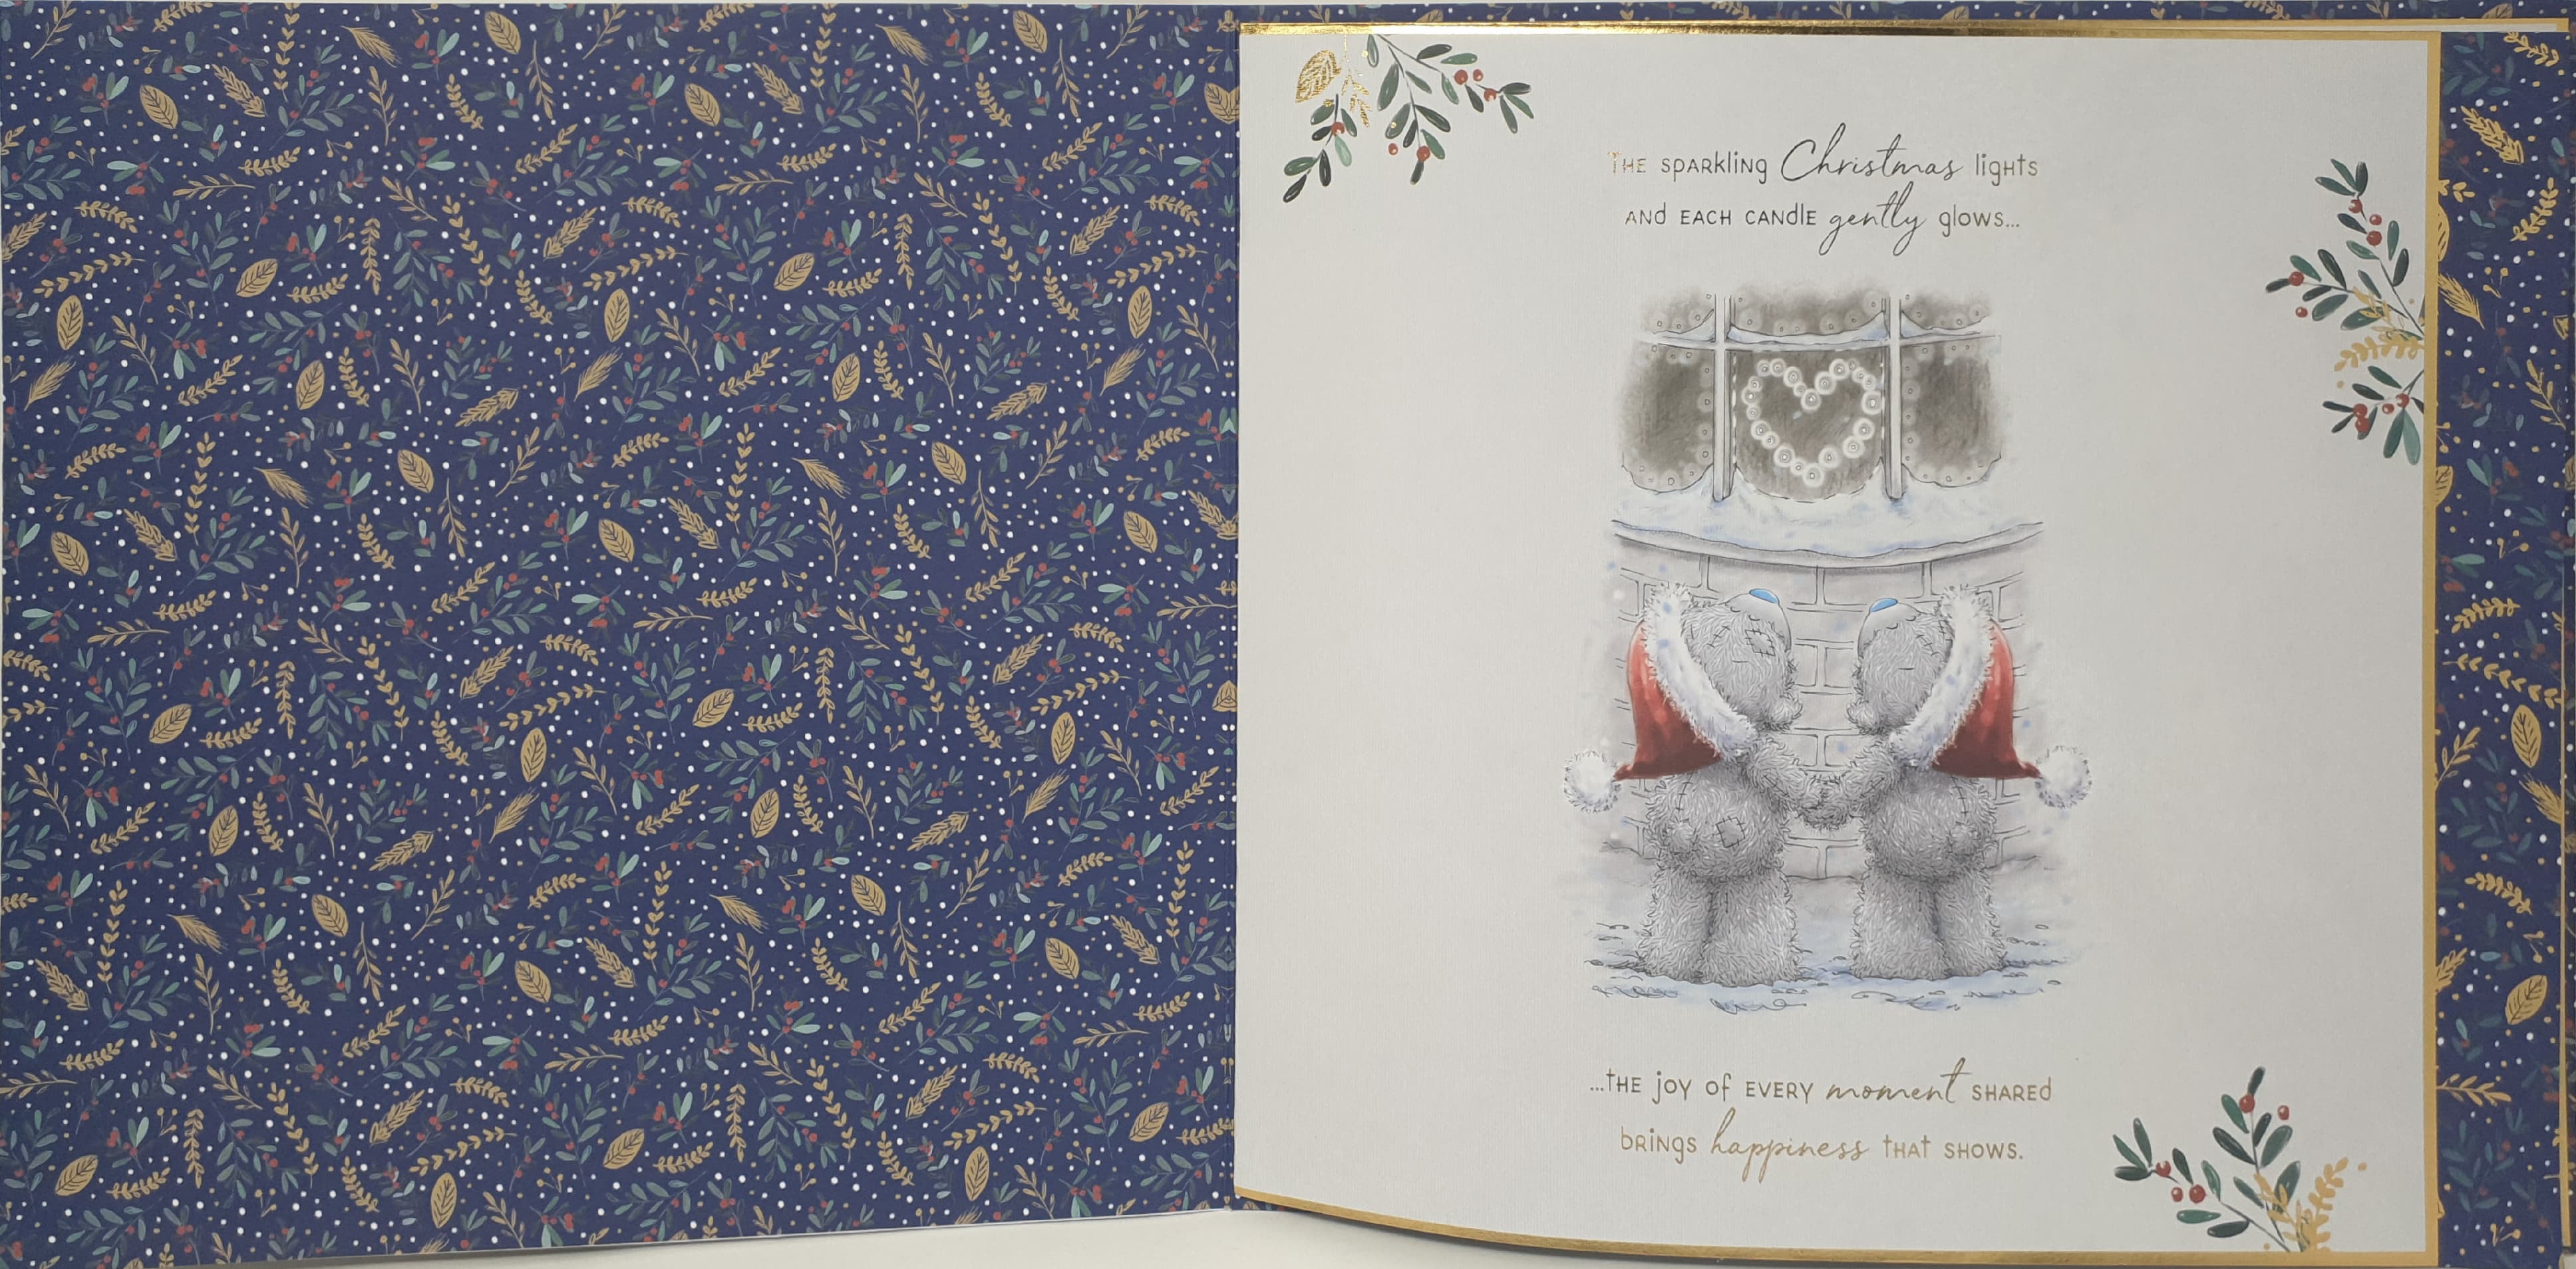 Girlfriend Christmas Card / Teddy Bears with Hot Chocolate (Card In A Presentation Box)